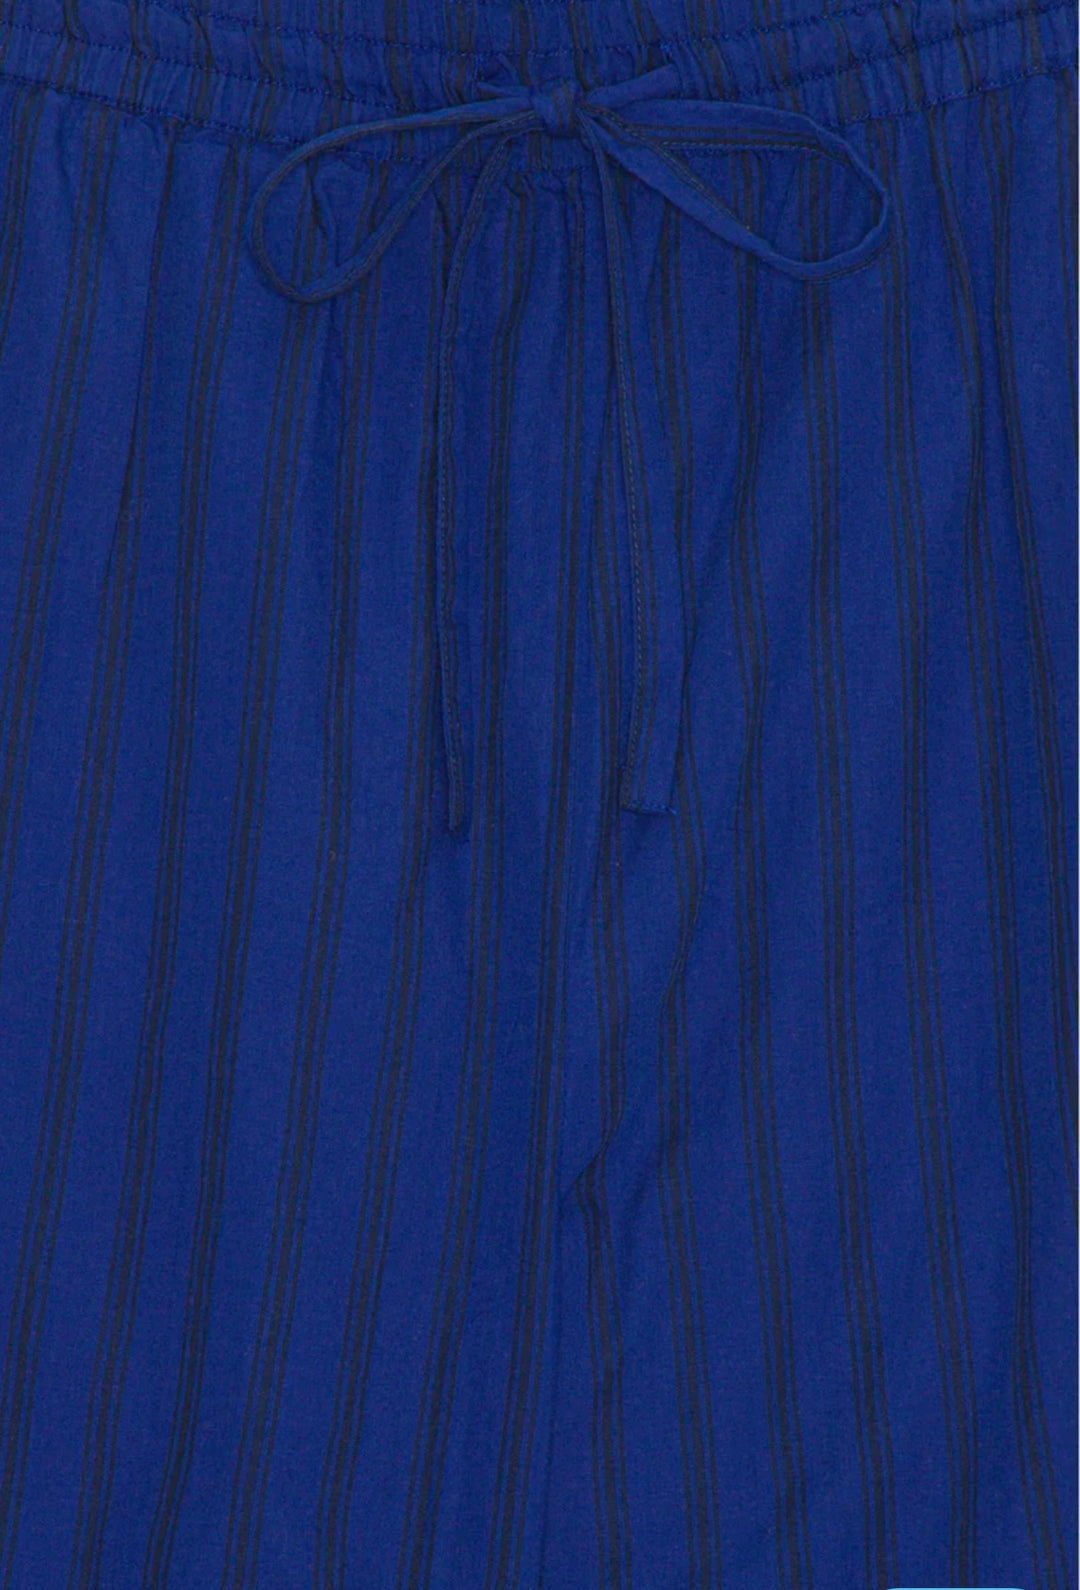 Moon bukse stripet blue/navy